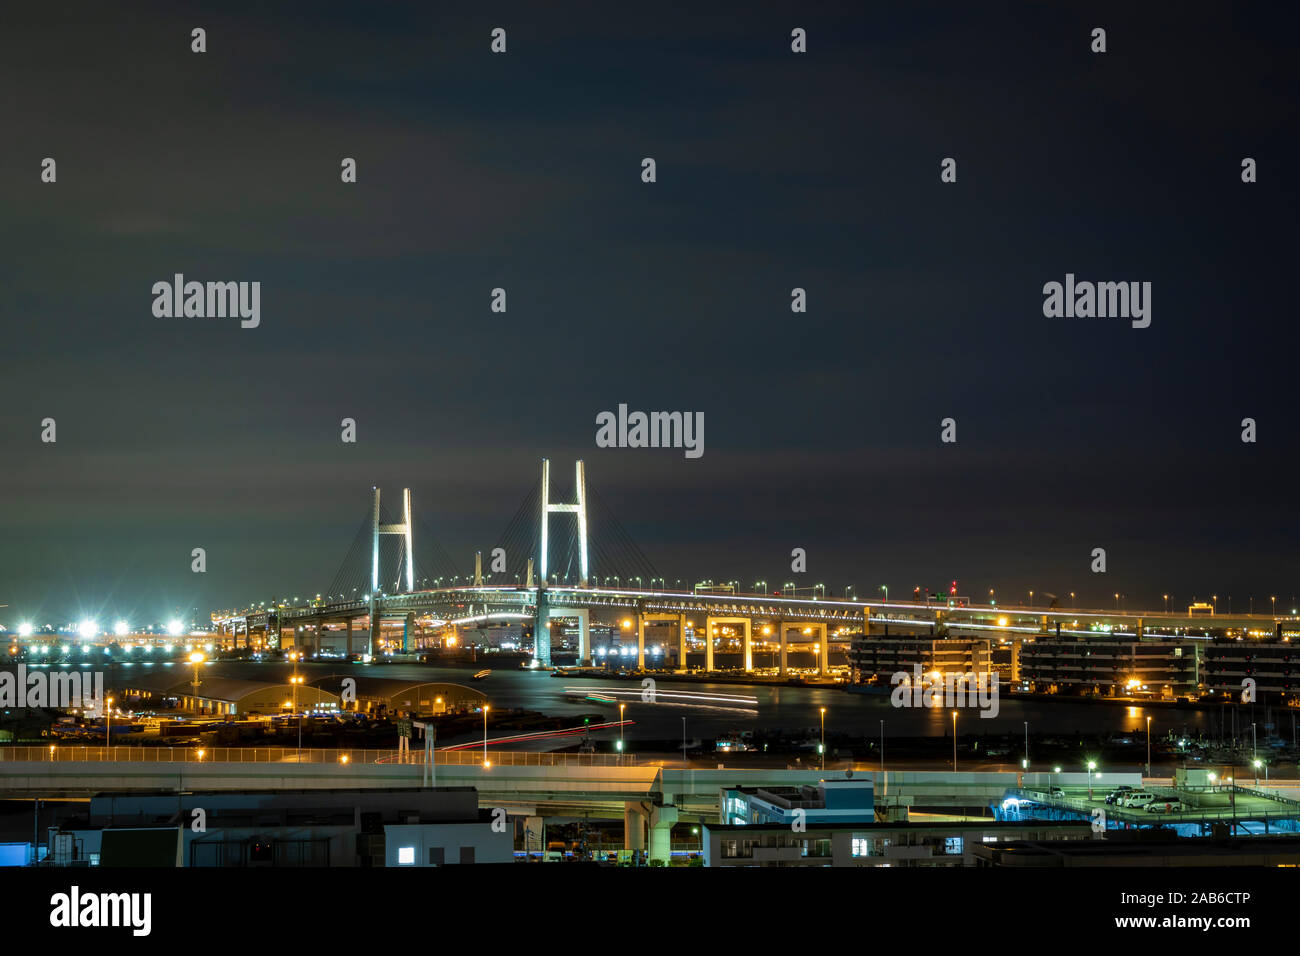 View of the Yokohama port at night. Long exposure. Landscape orientation. Stock Photo